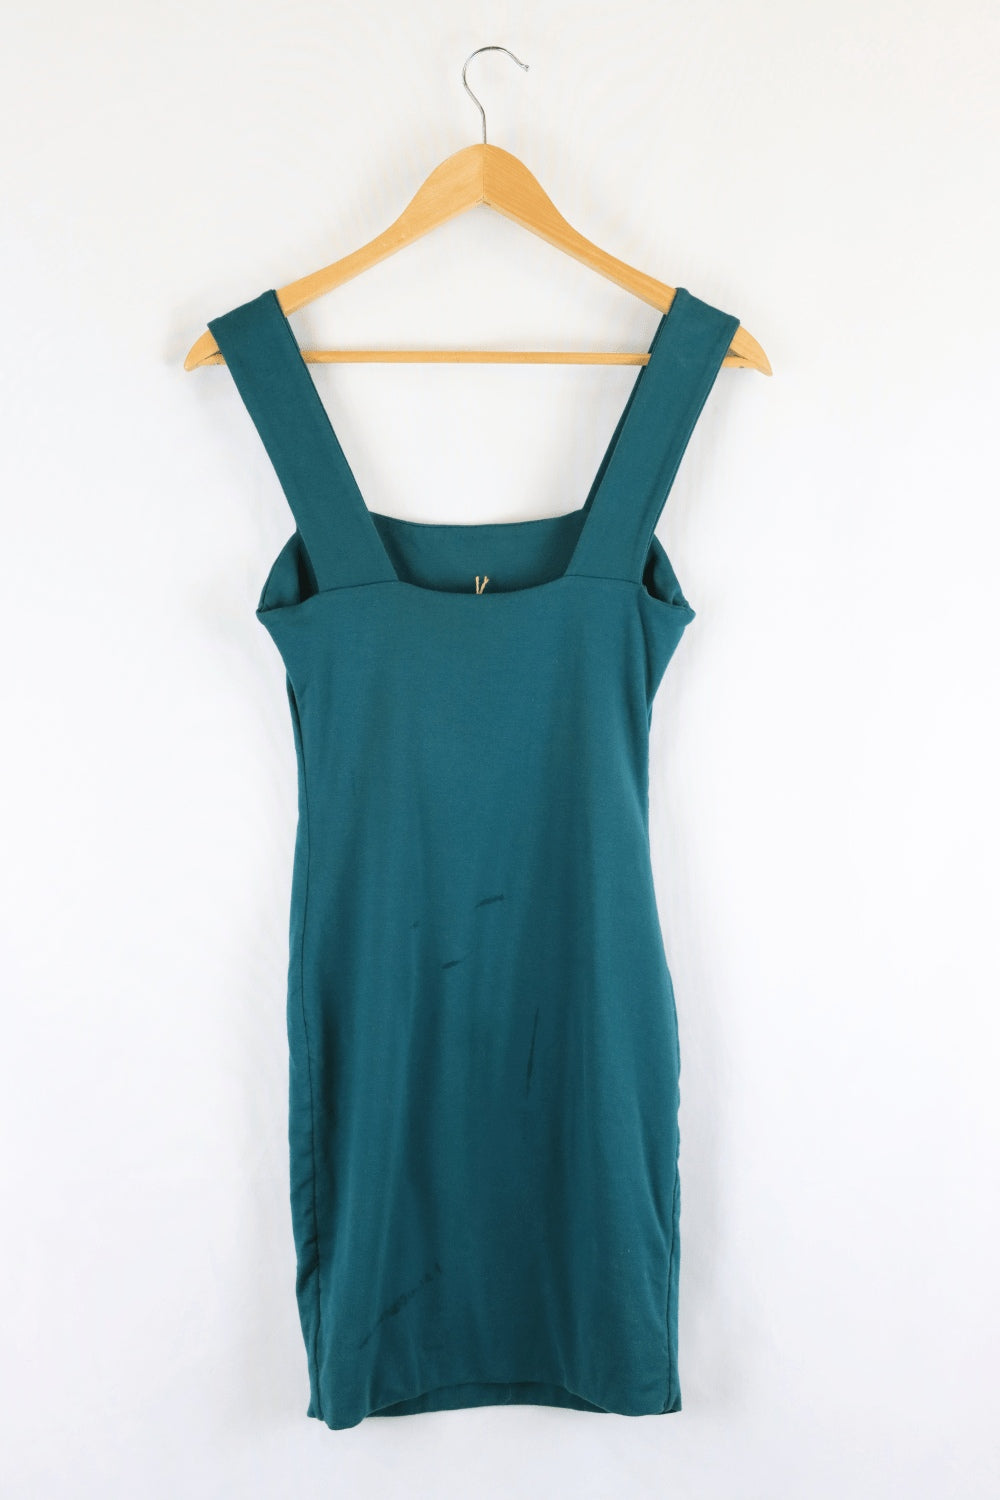 Kookai Green Dress 10